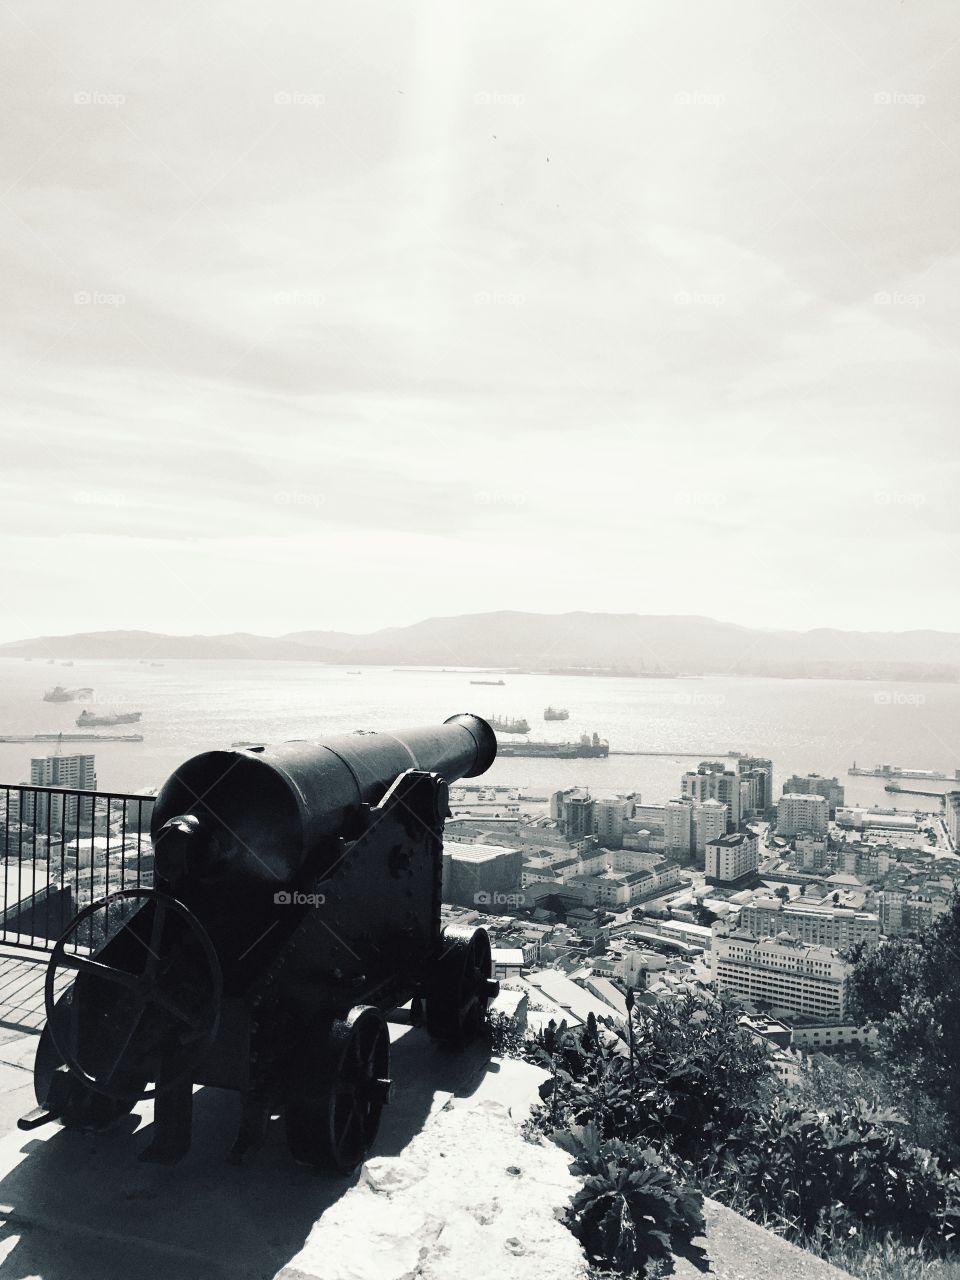 Cannon, Gibraltar history, views